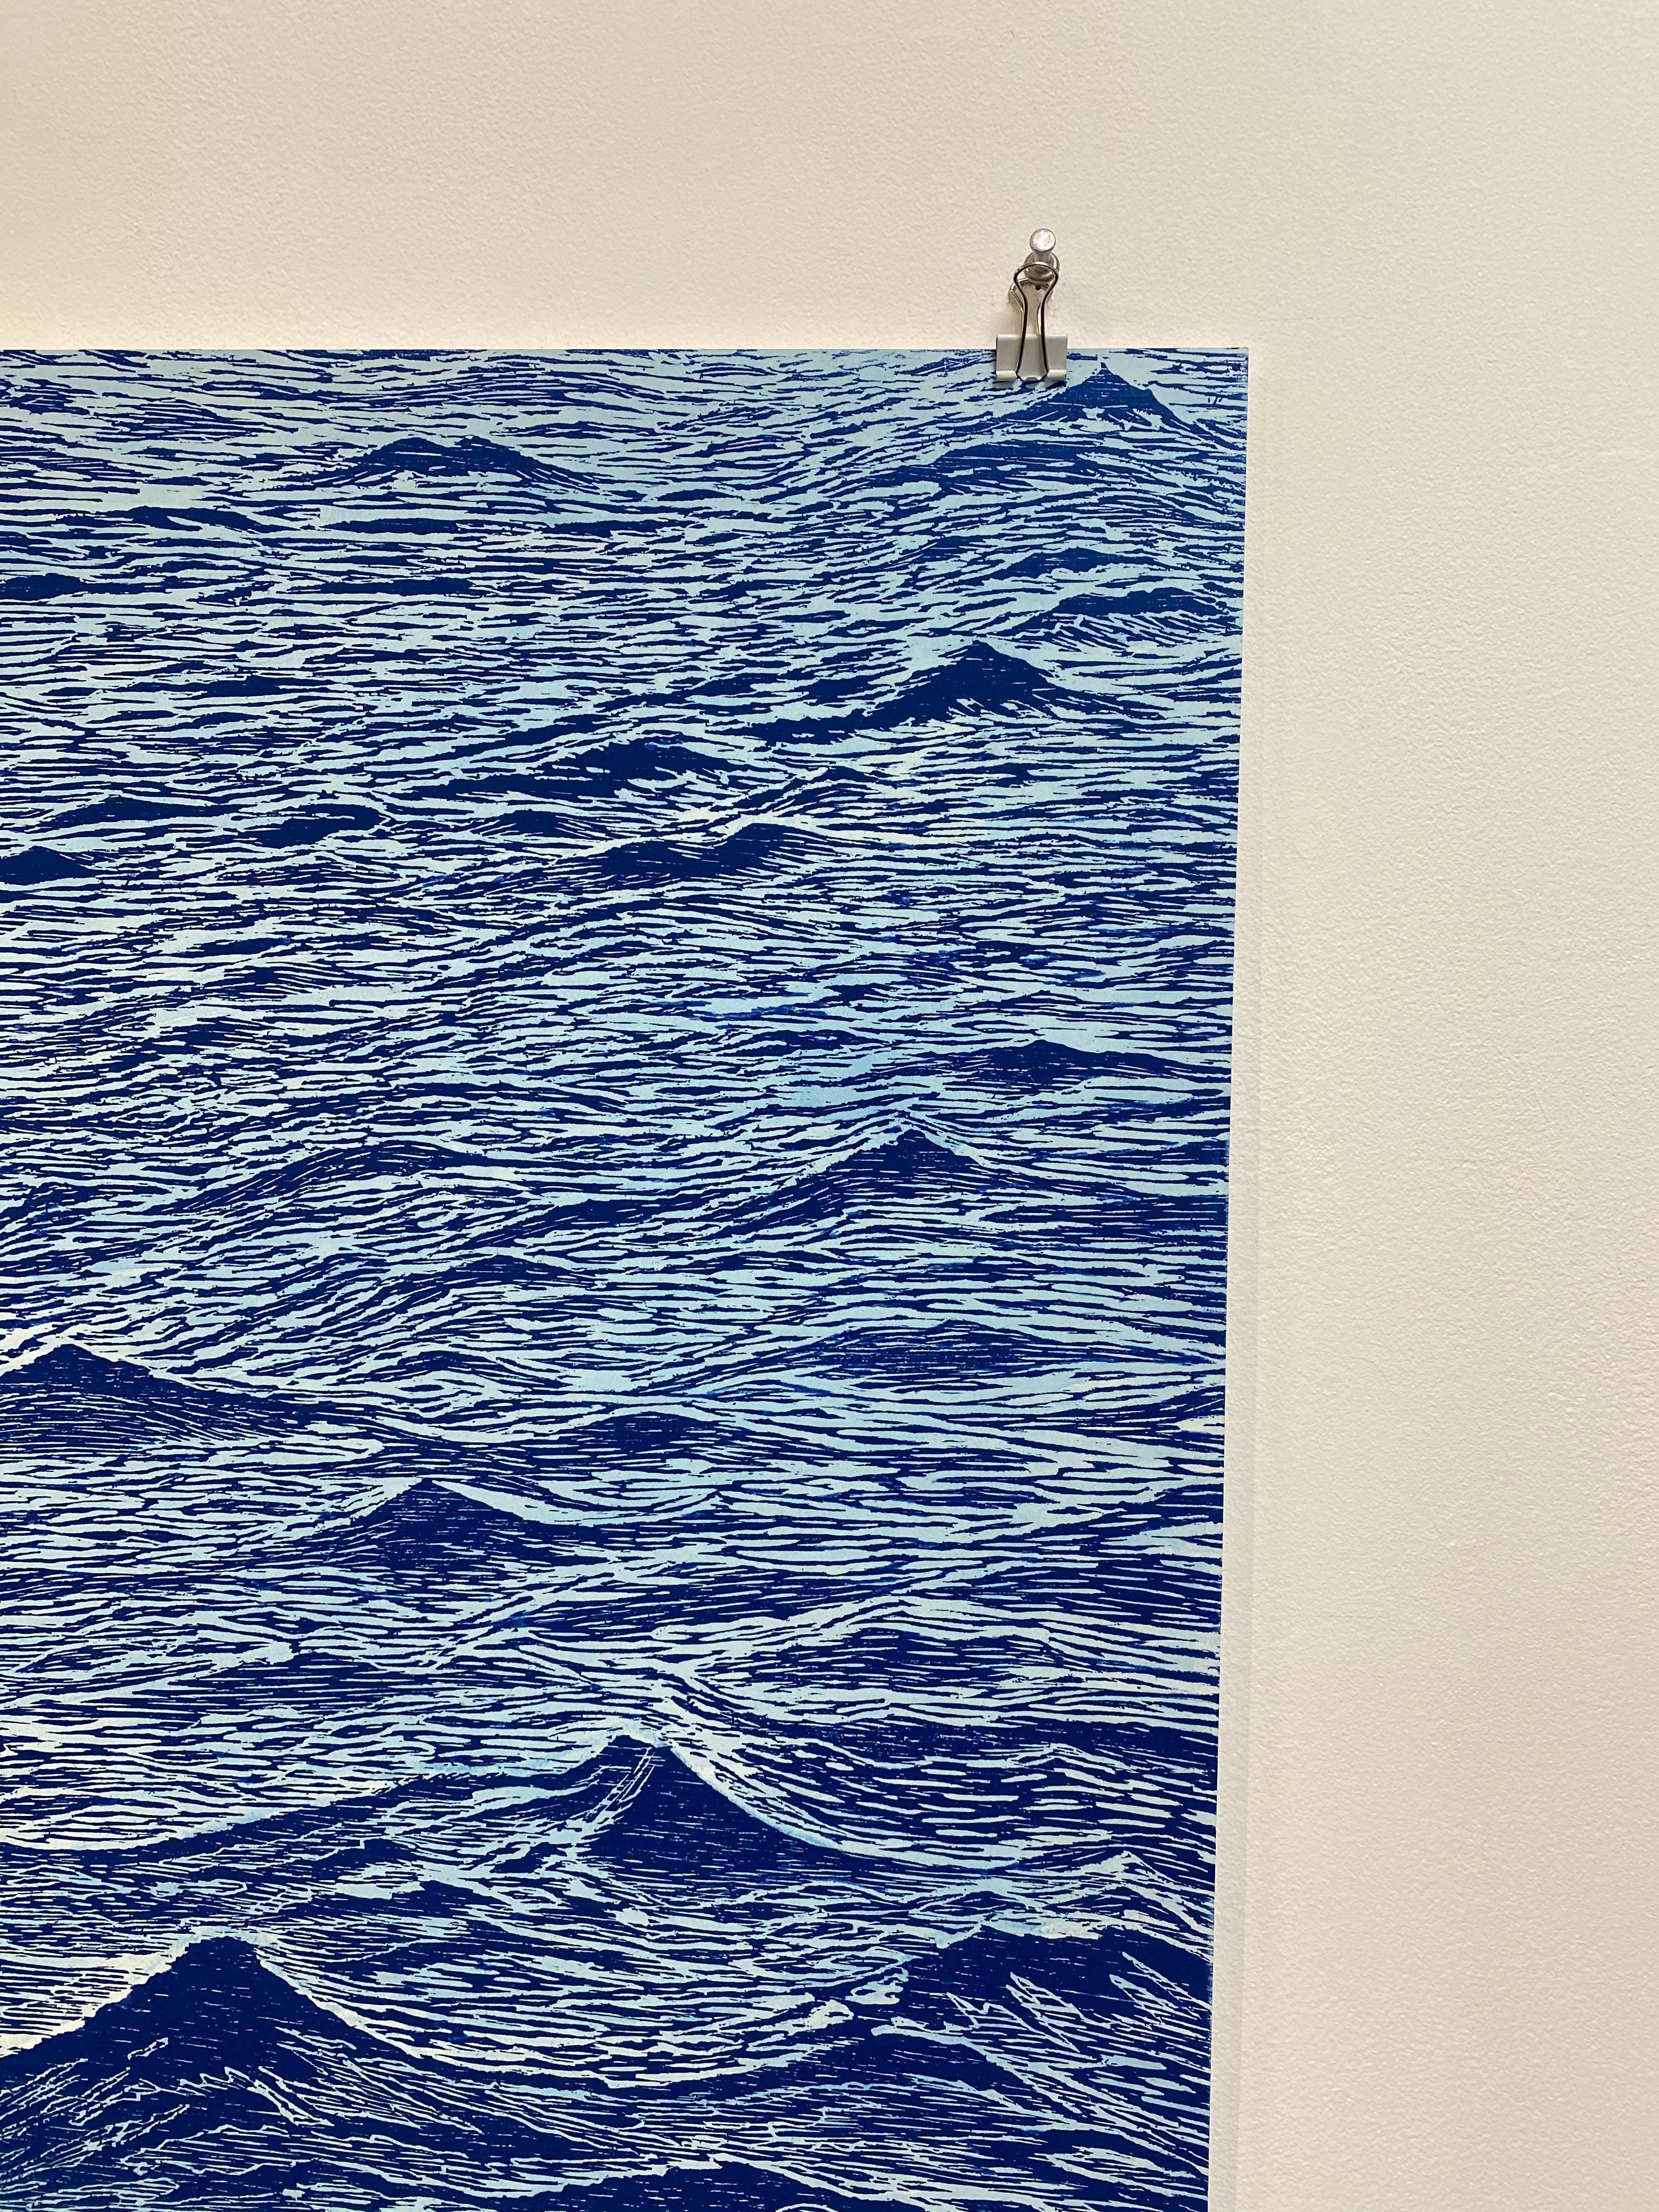 Seascape 24, Woodcut Print of Ocean Waves in Light Blue and Dark Cobalt, Navy 10